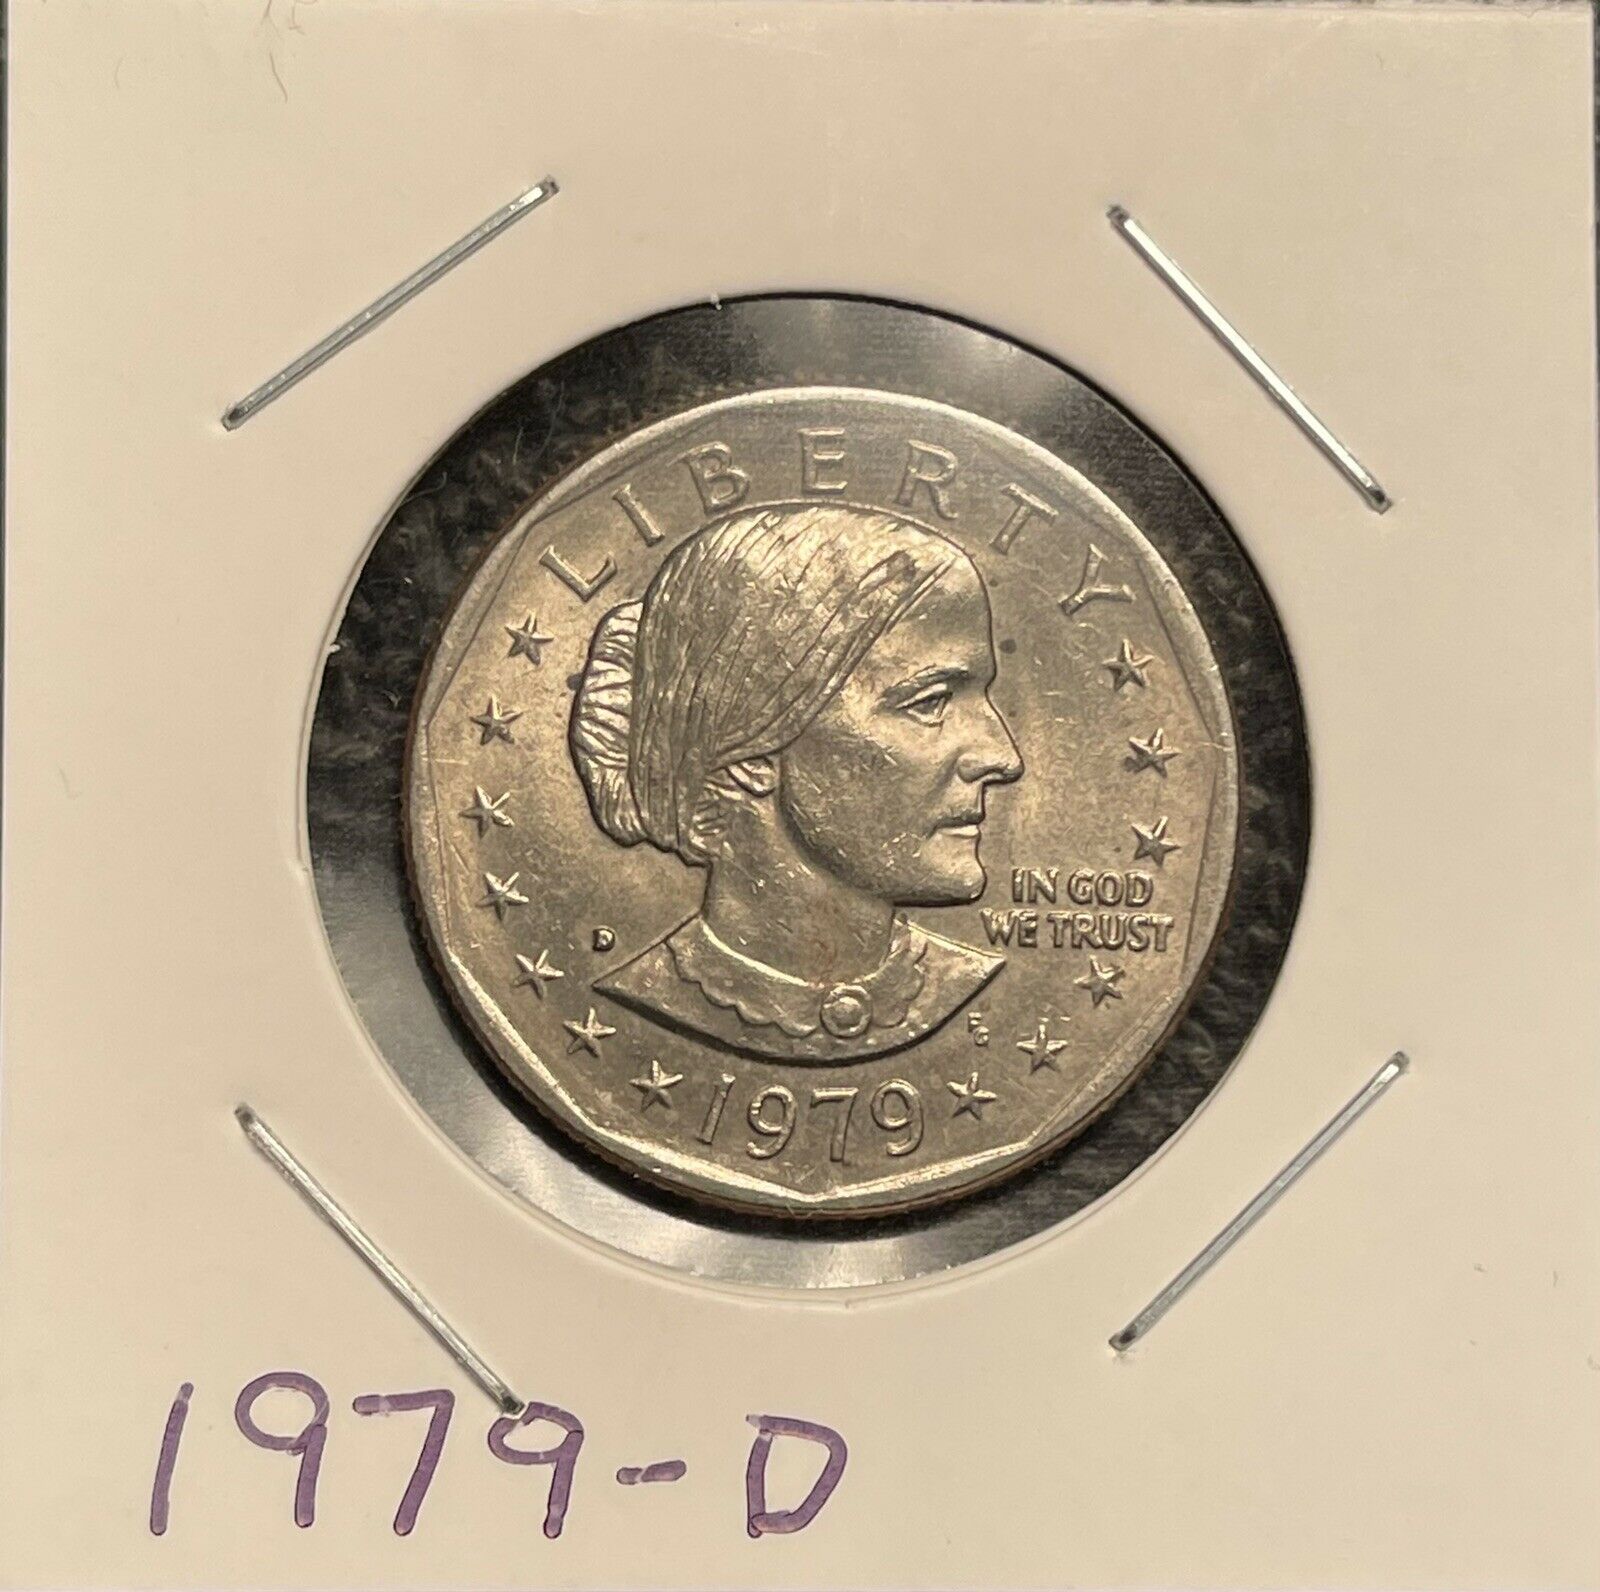 1979 D Susan B Anthony Dollar Coin Denver Mint - Narrow Rim